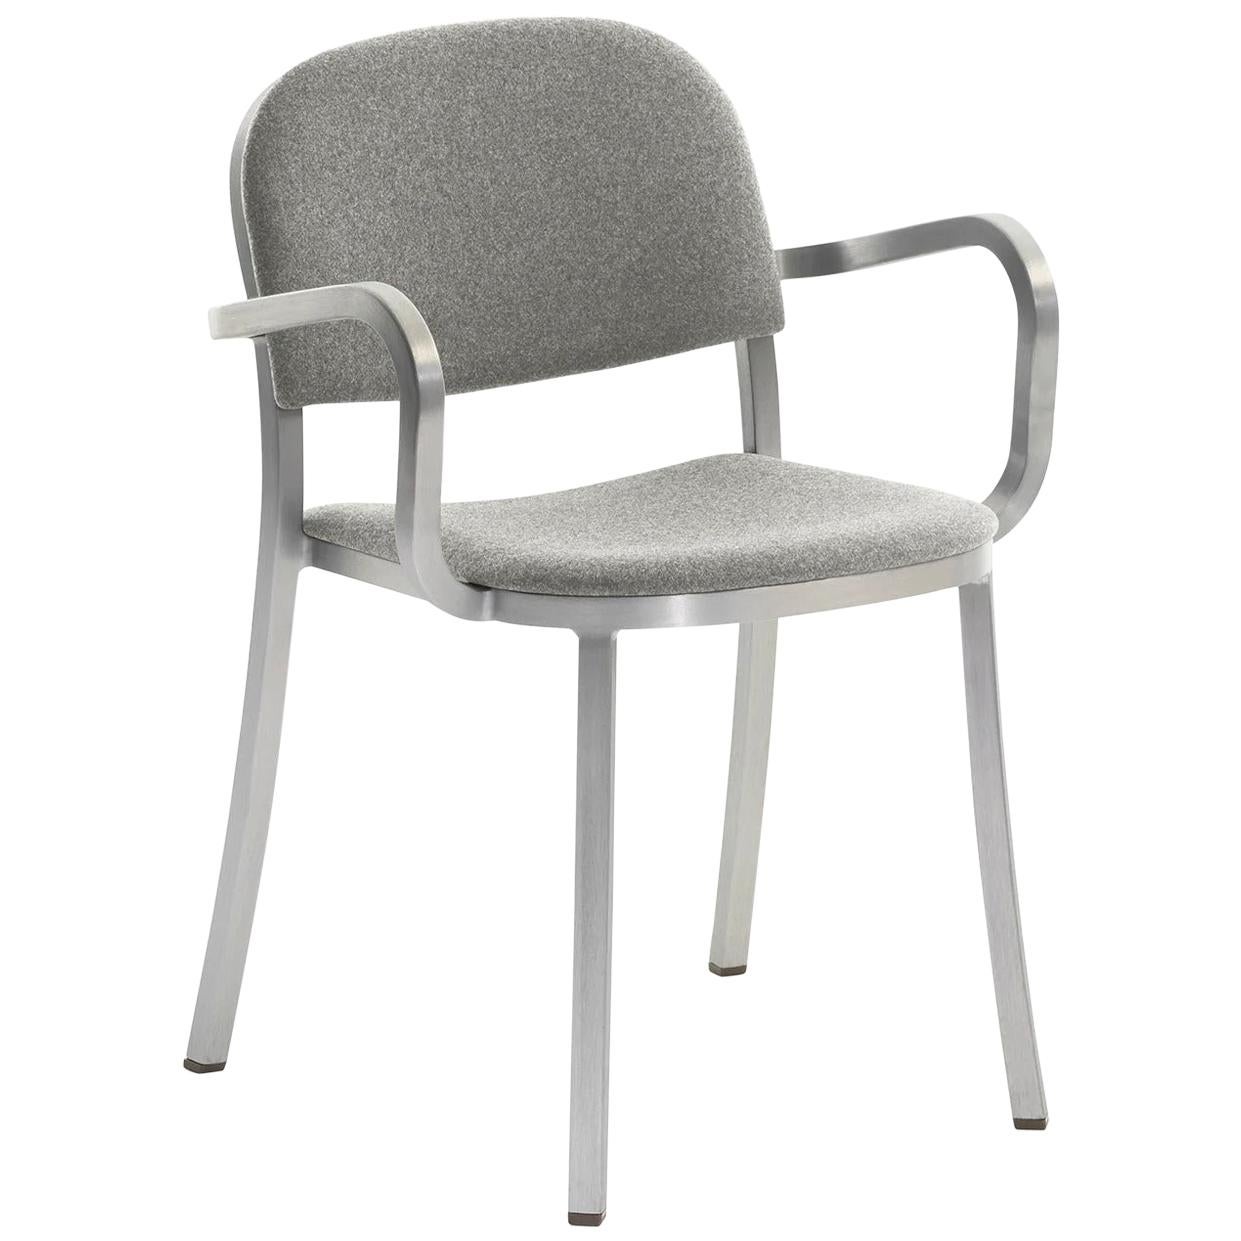 Emeco 1 Inch Armchair in Grey Upholstery & Aluminum Frame by Jasper Morrison